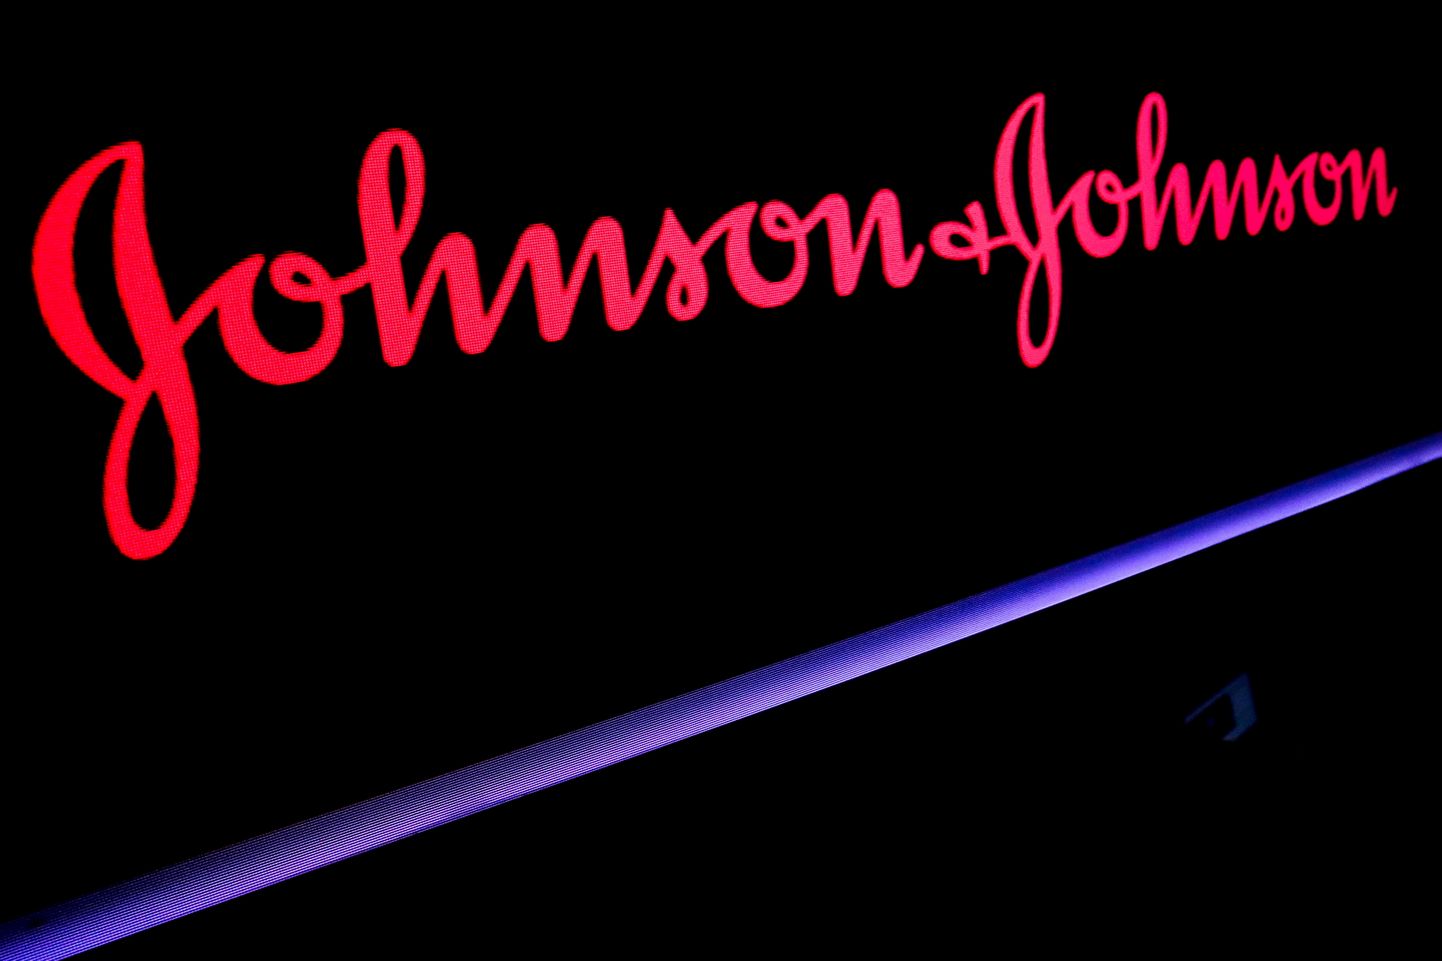 ohnson & Johnsoni logo.